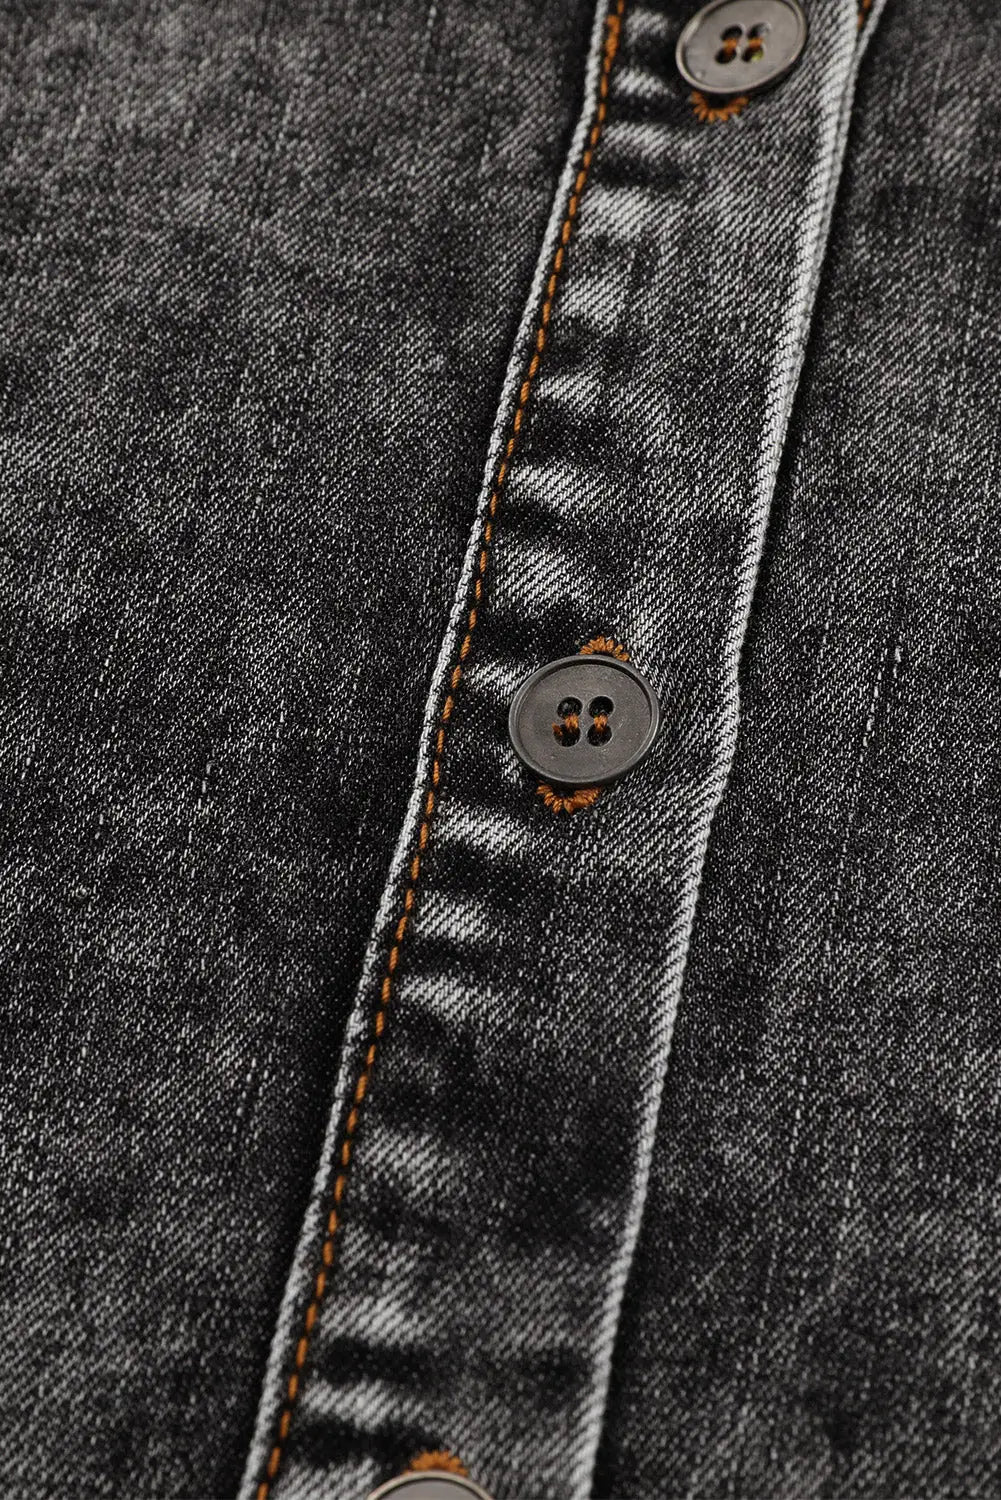 Blue puff sleeve button-up denim jacket - outerwear